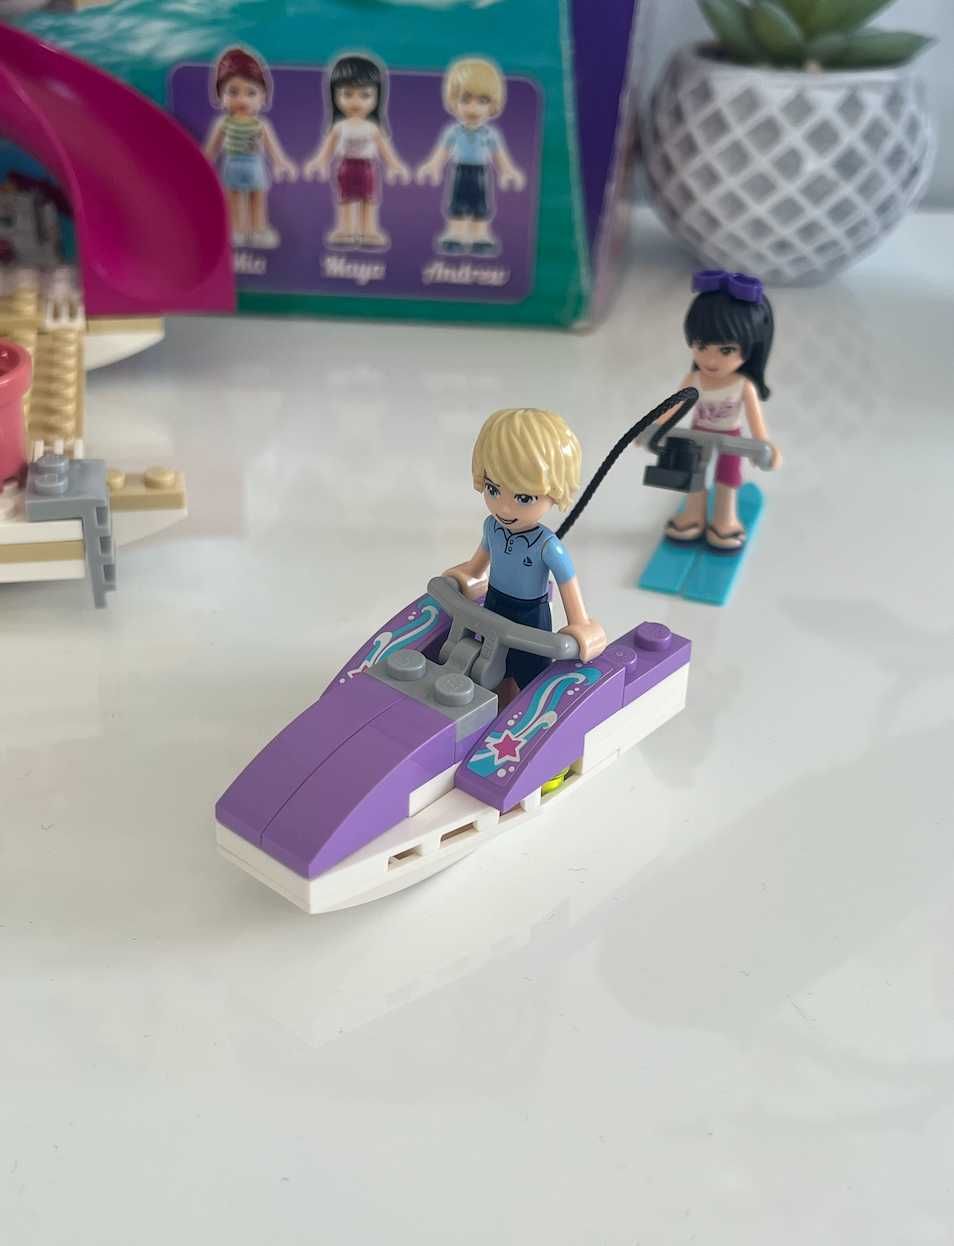 Lego friends 41015 jacht